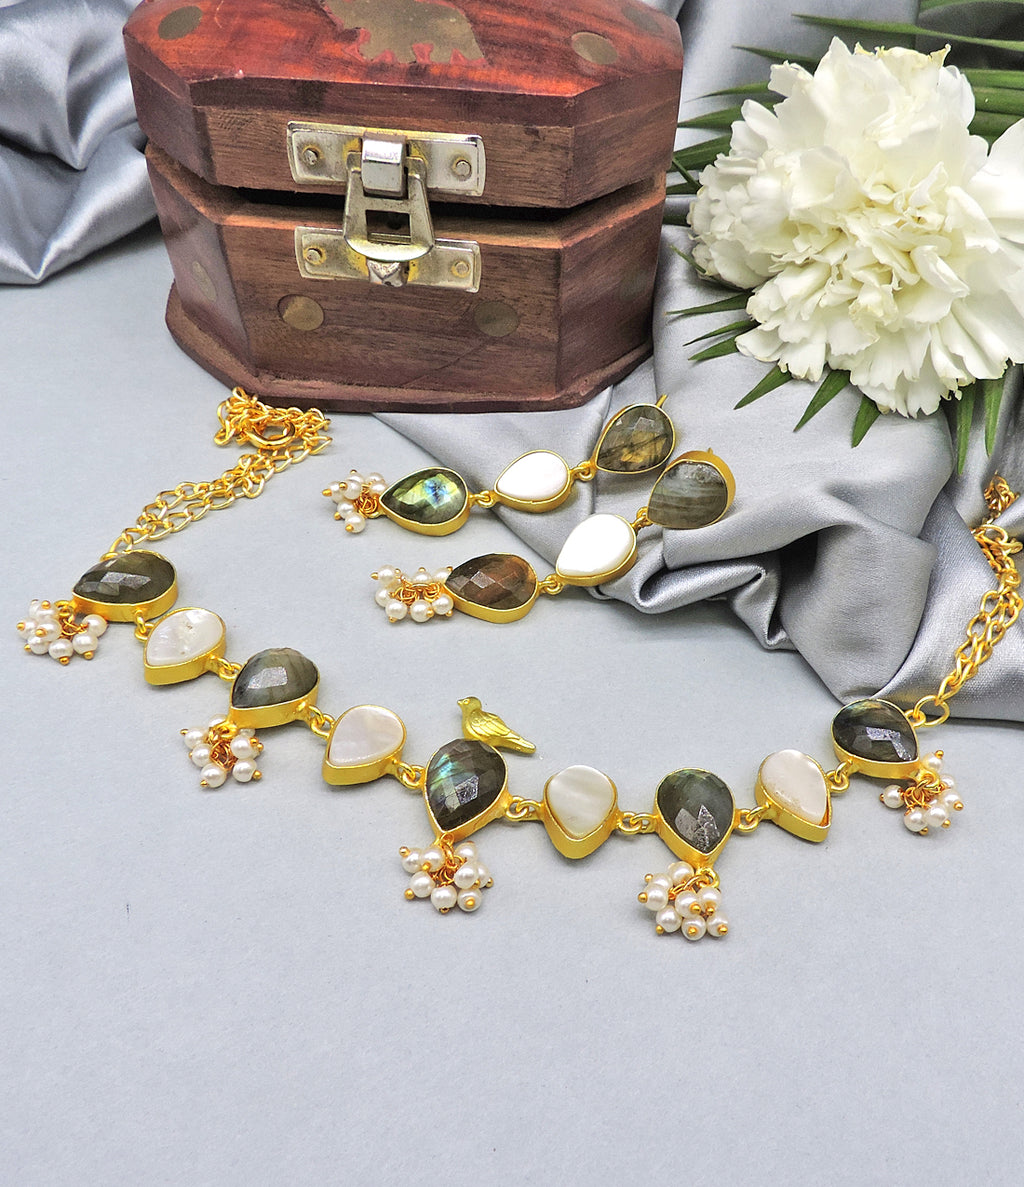 Labradorite Drop Earrings - Statement Earrings - Gold-Plated & Hypoallergenic Jewellery - Made in India - Dubai Jewellery - Dori